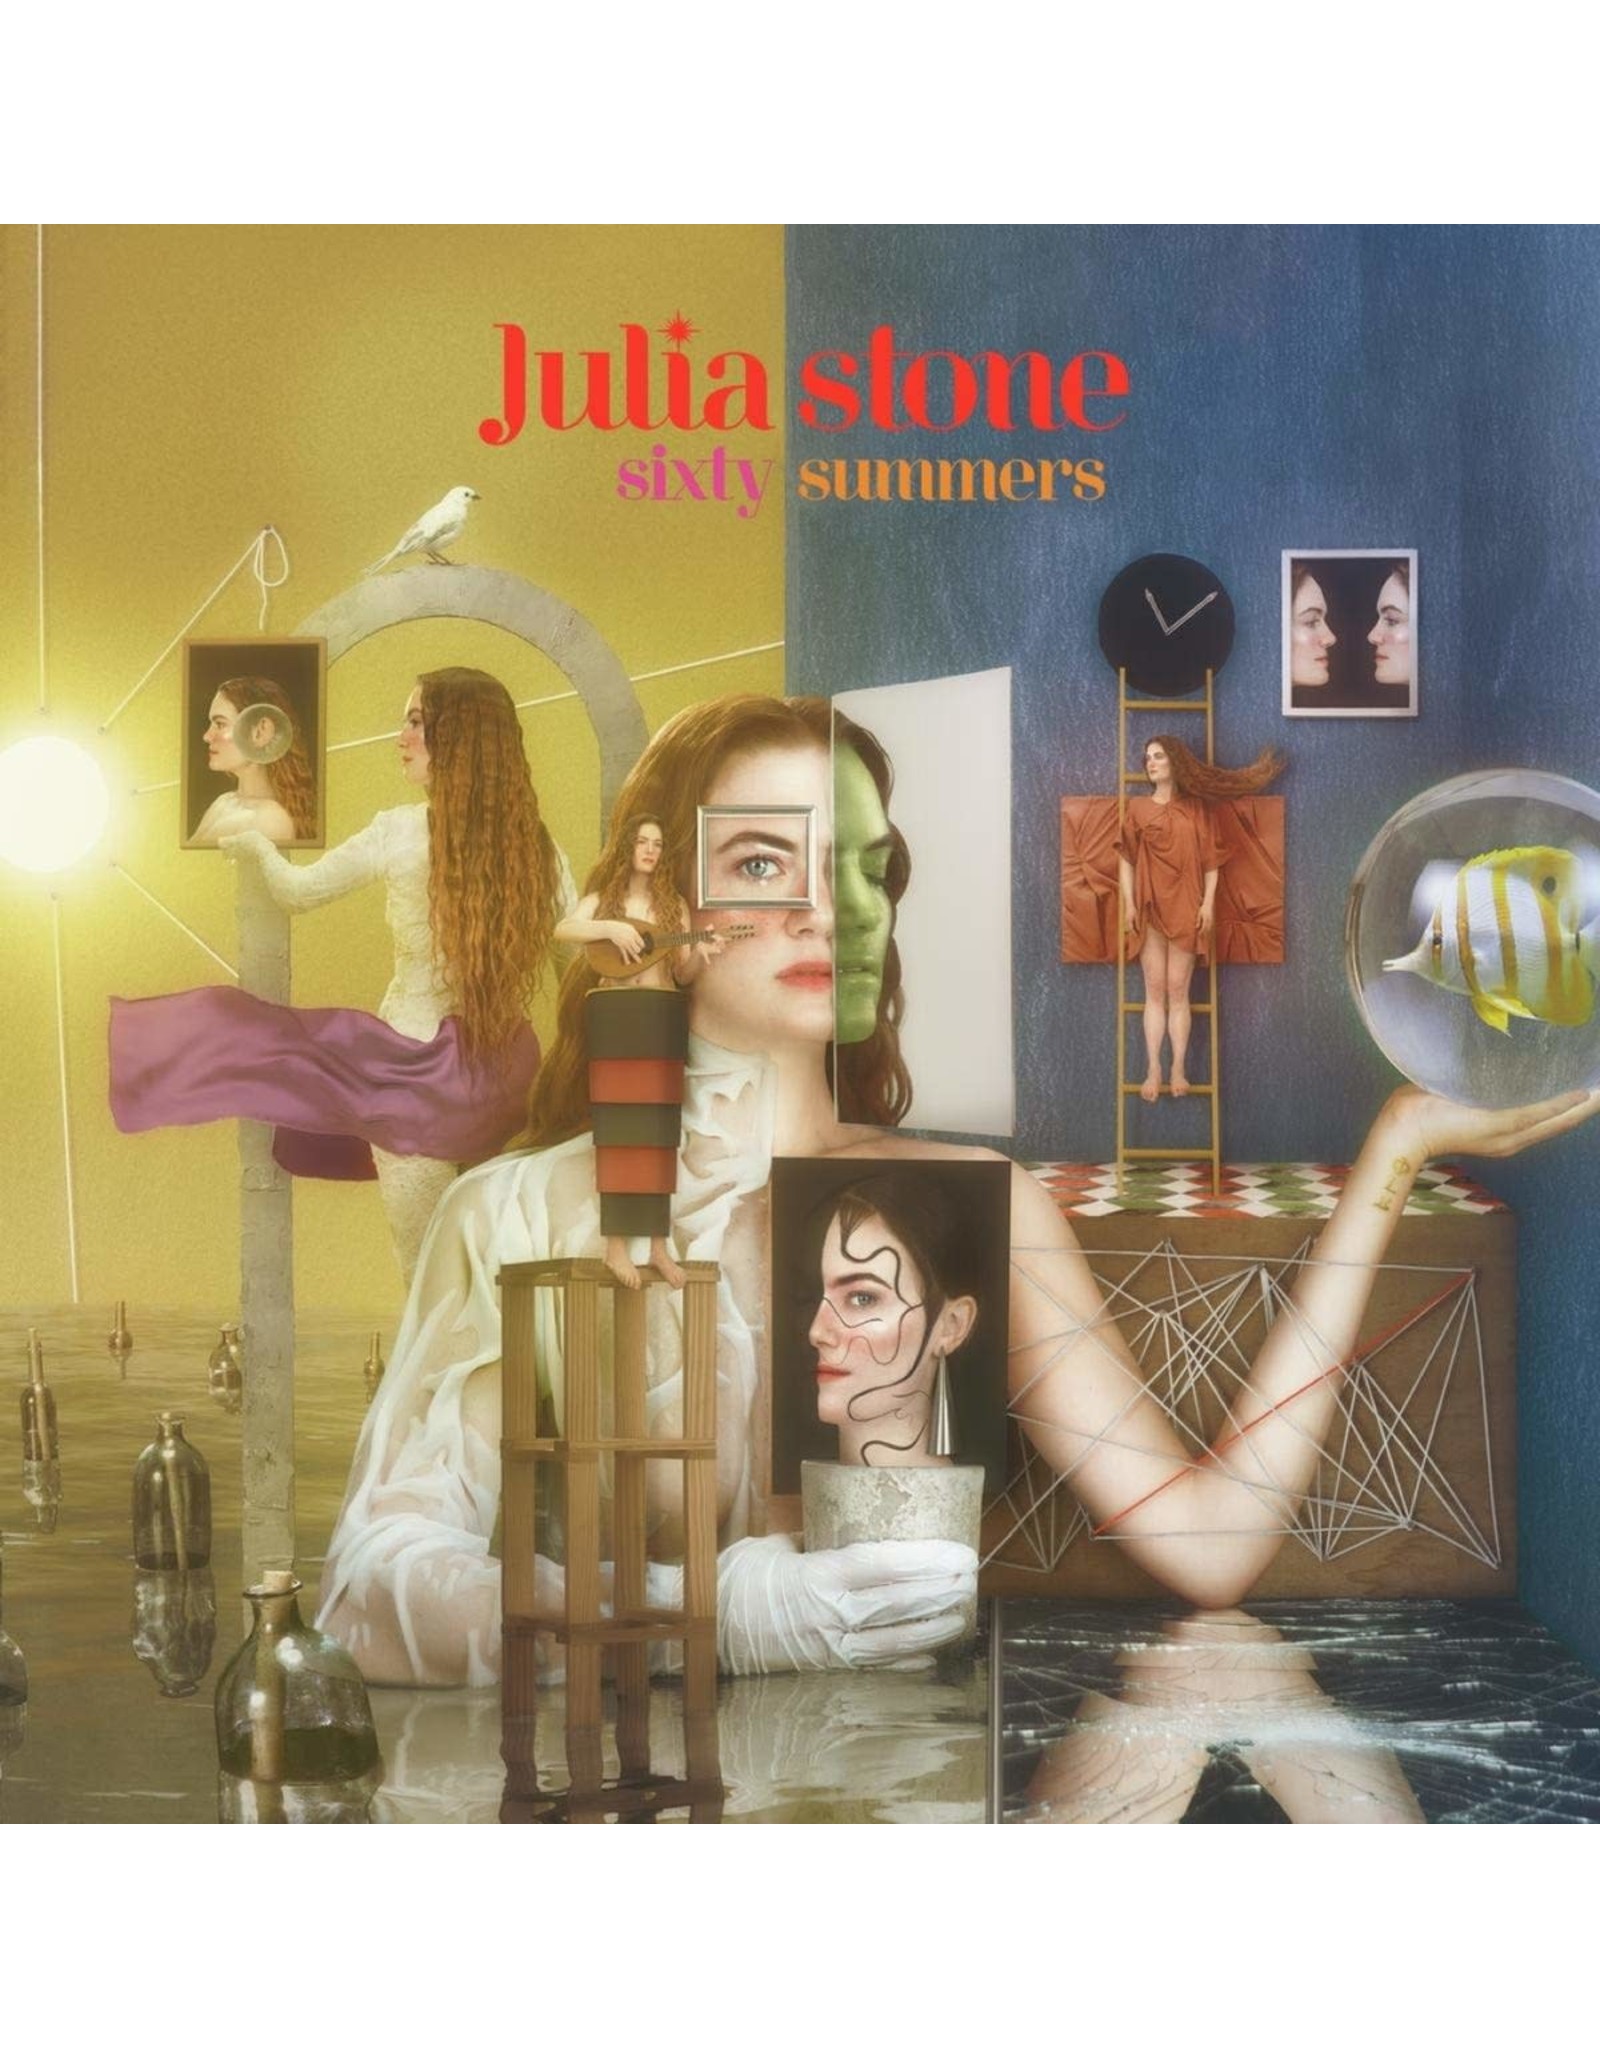 Stone, Julia - Sixty Summers LP